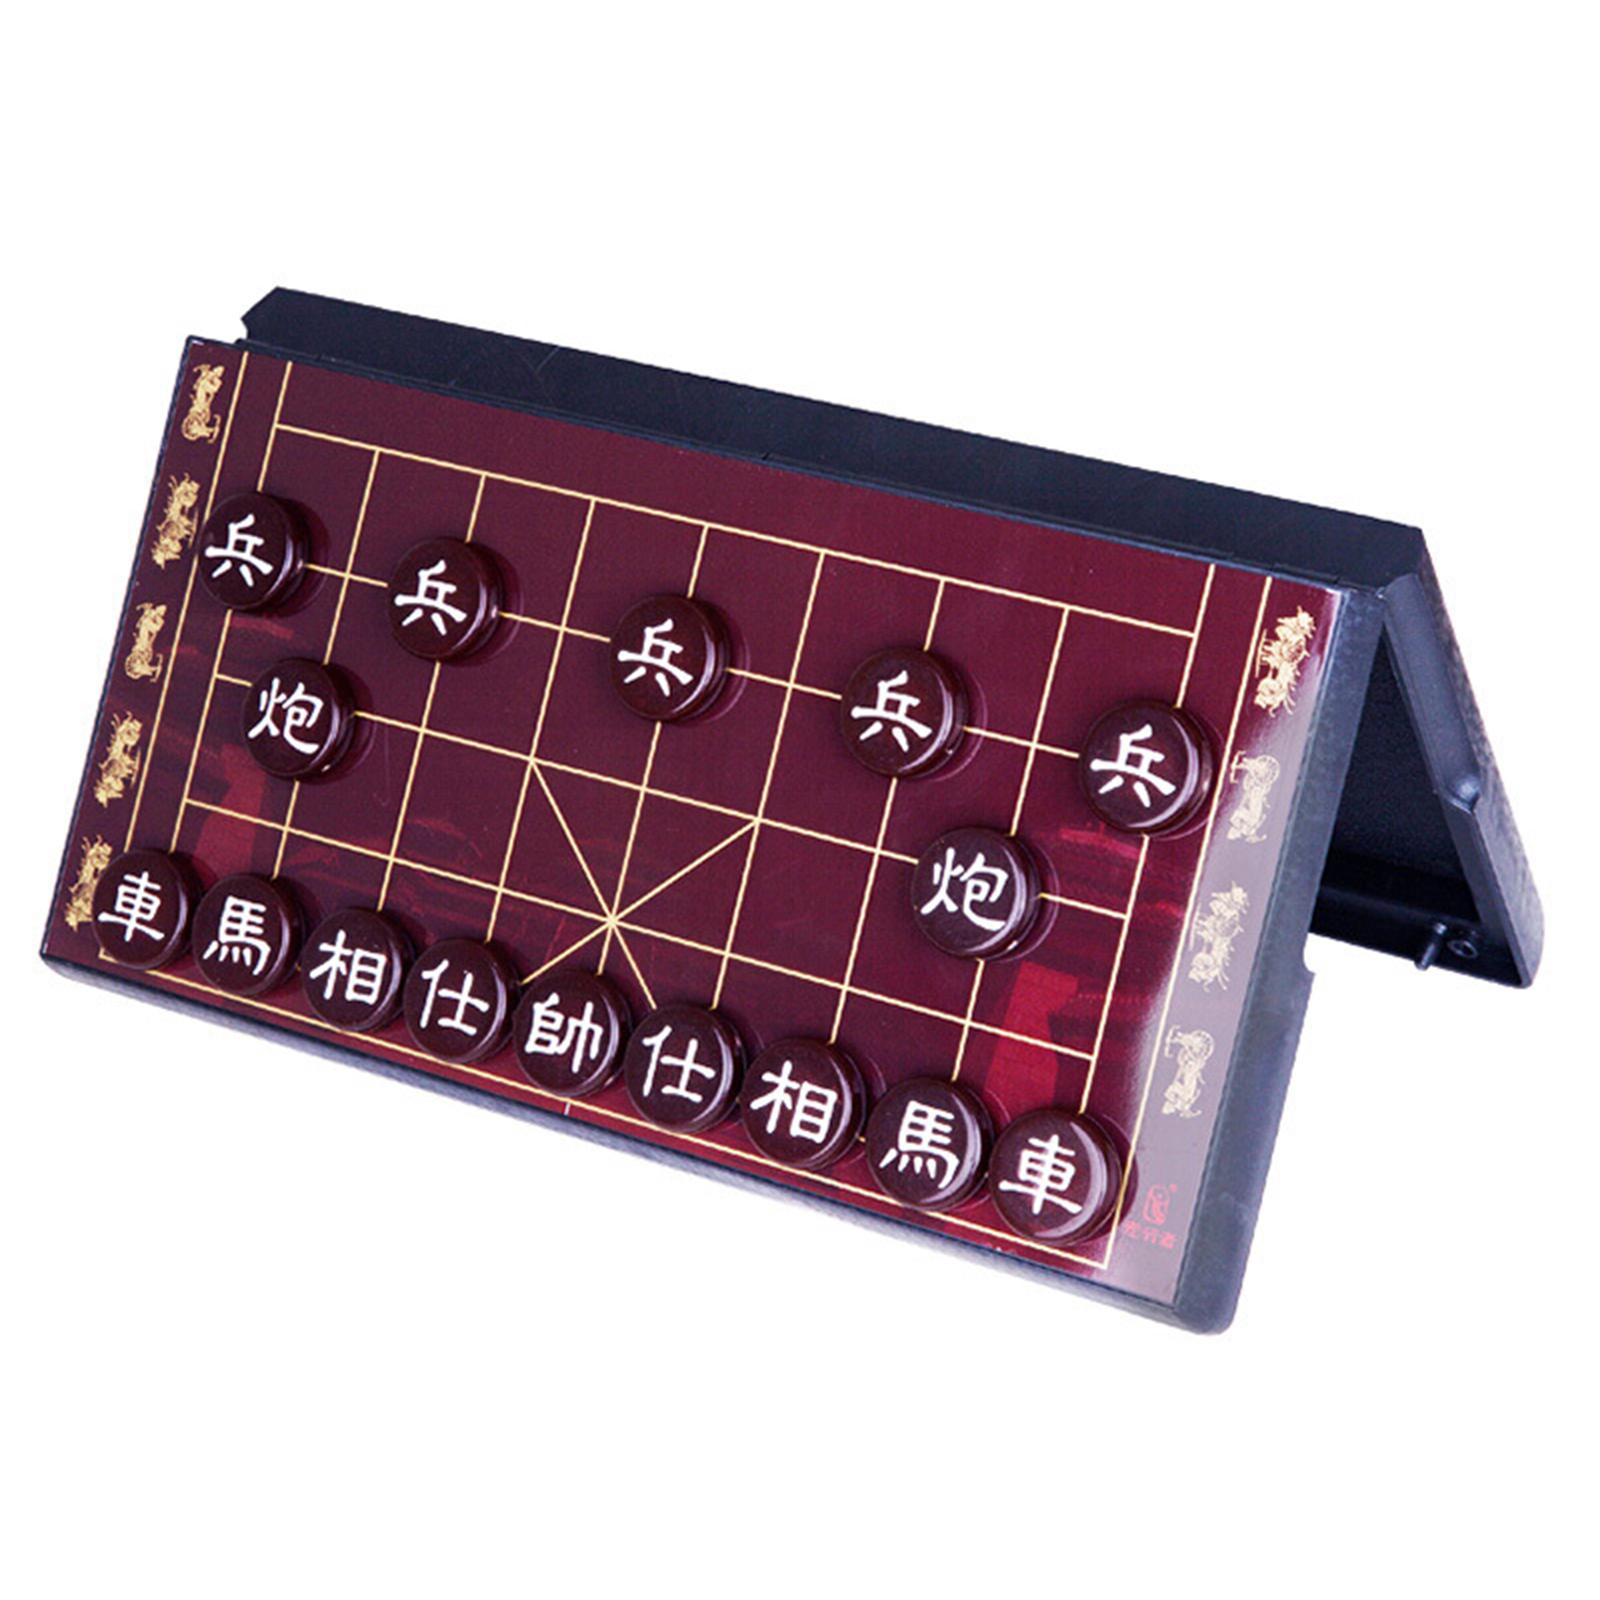 Chinese Chess Xiangqi Magnetische Stuk Compact Magnetische Chinese Xiangqi Schaken Bordspel Voor Speelgoed Reizen Boord